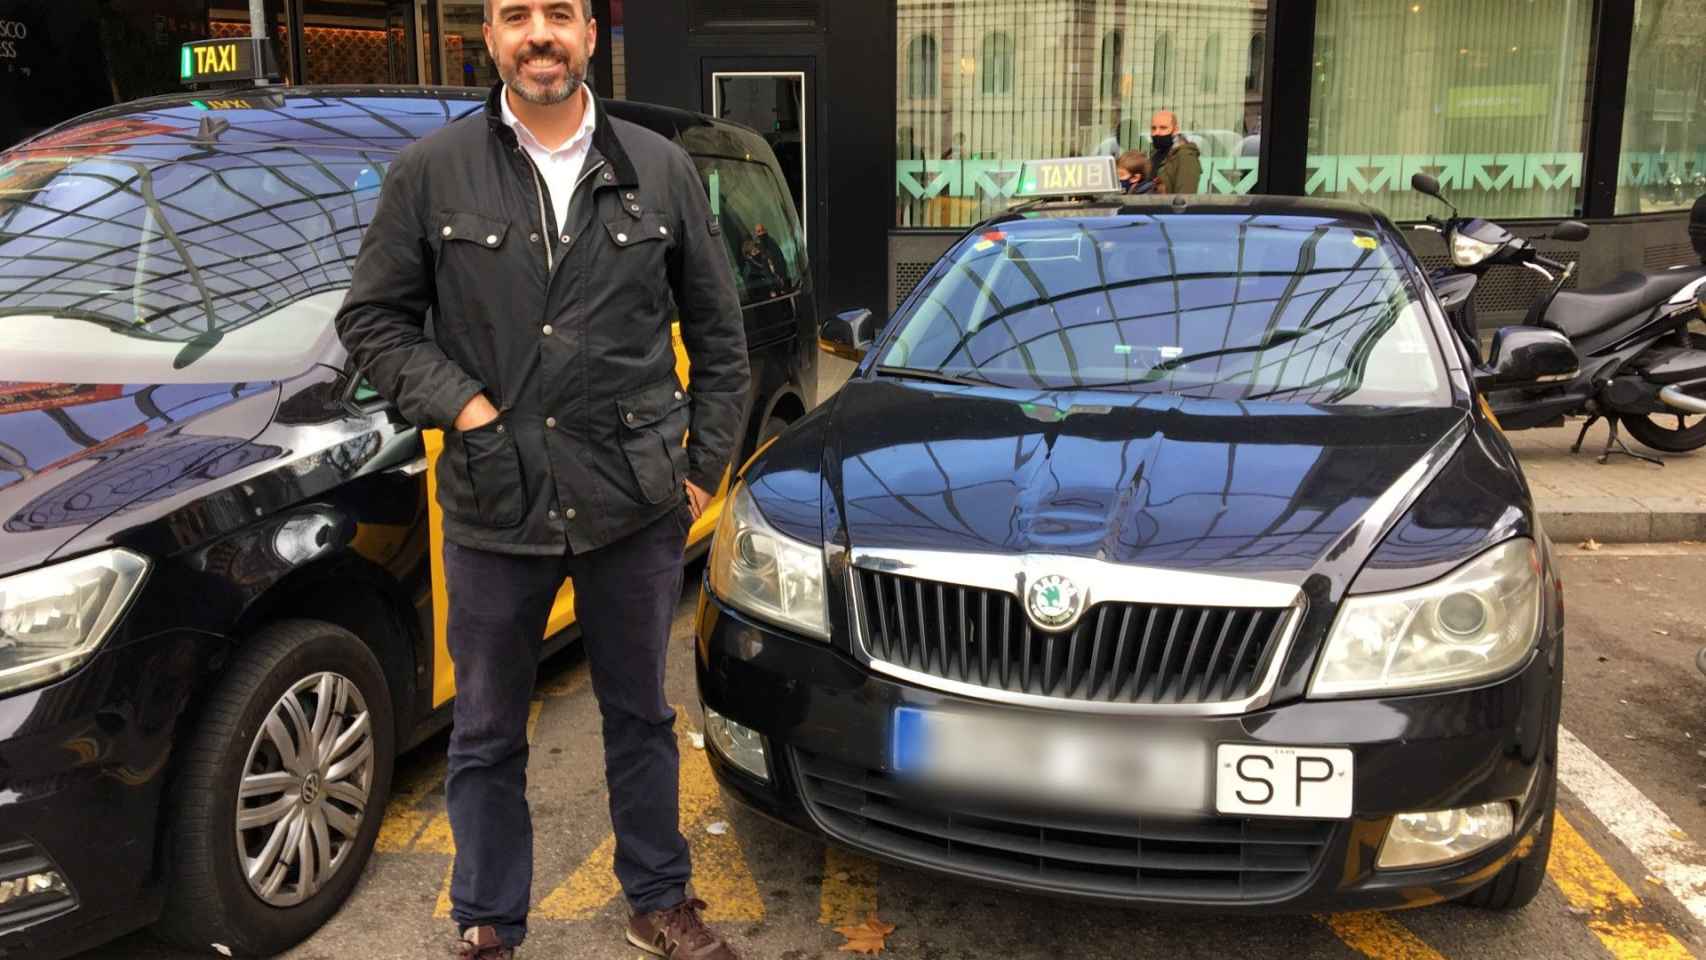 Jaime Sau junto a su taxi en Barcelona / RP